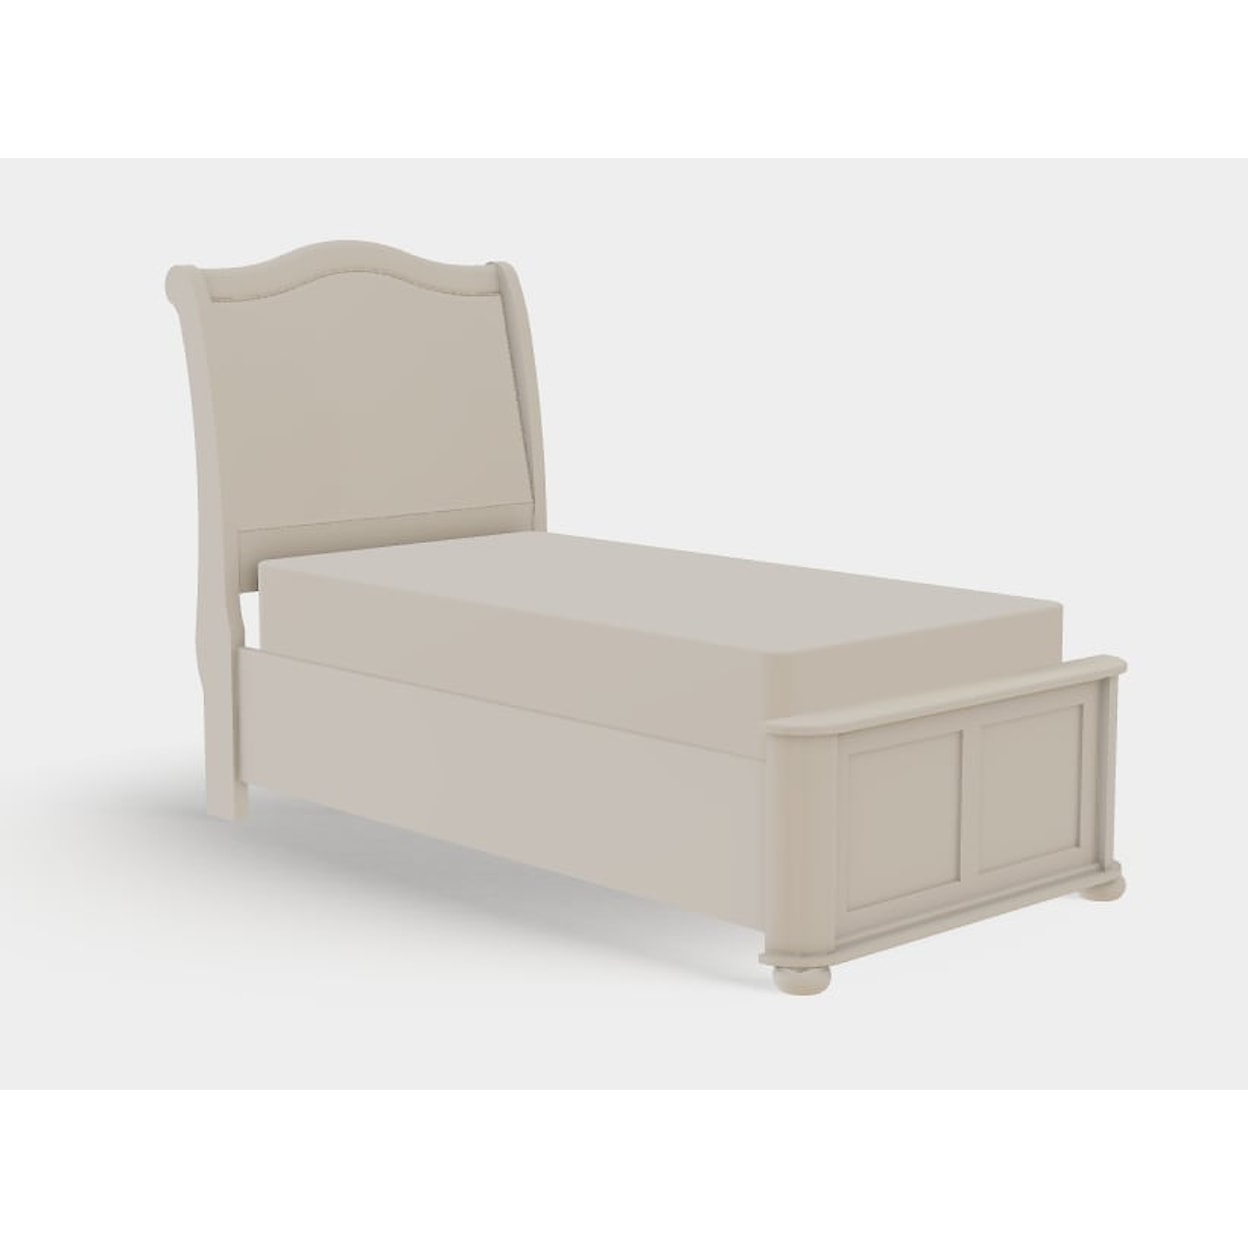 Mavin Kingsport Twin XL Upholstered Bed Right Drawerside